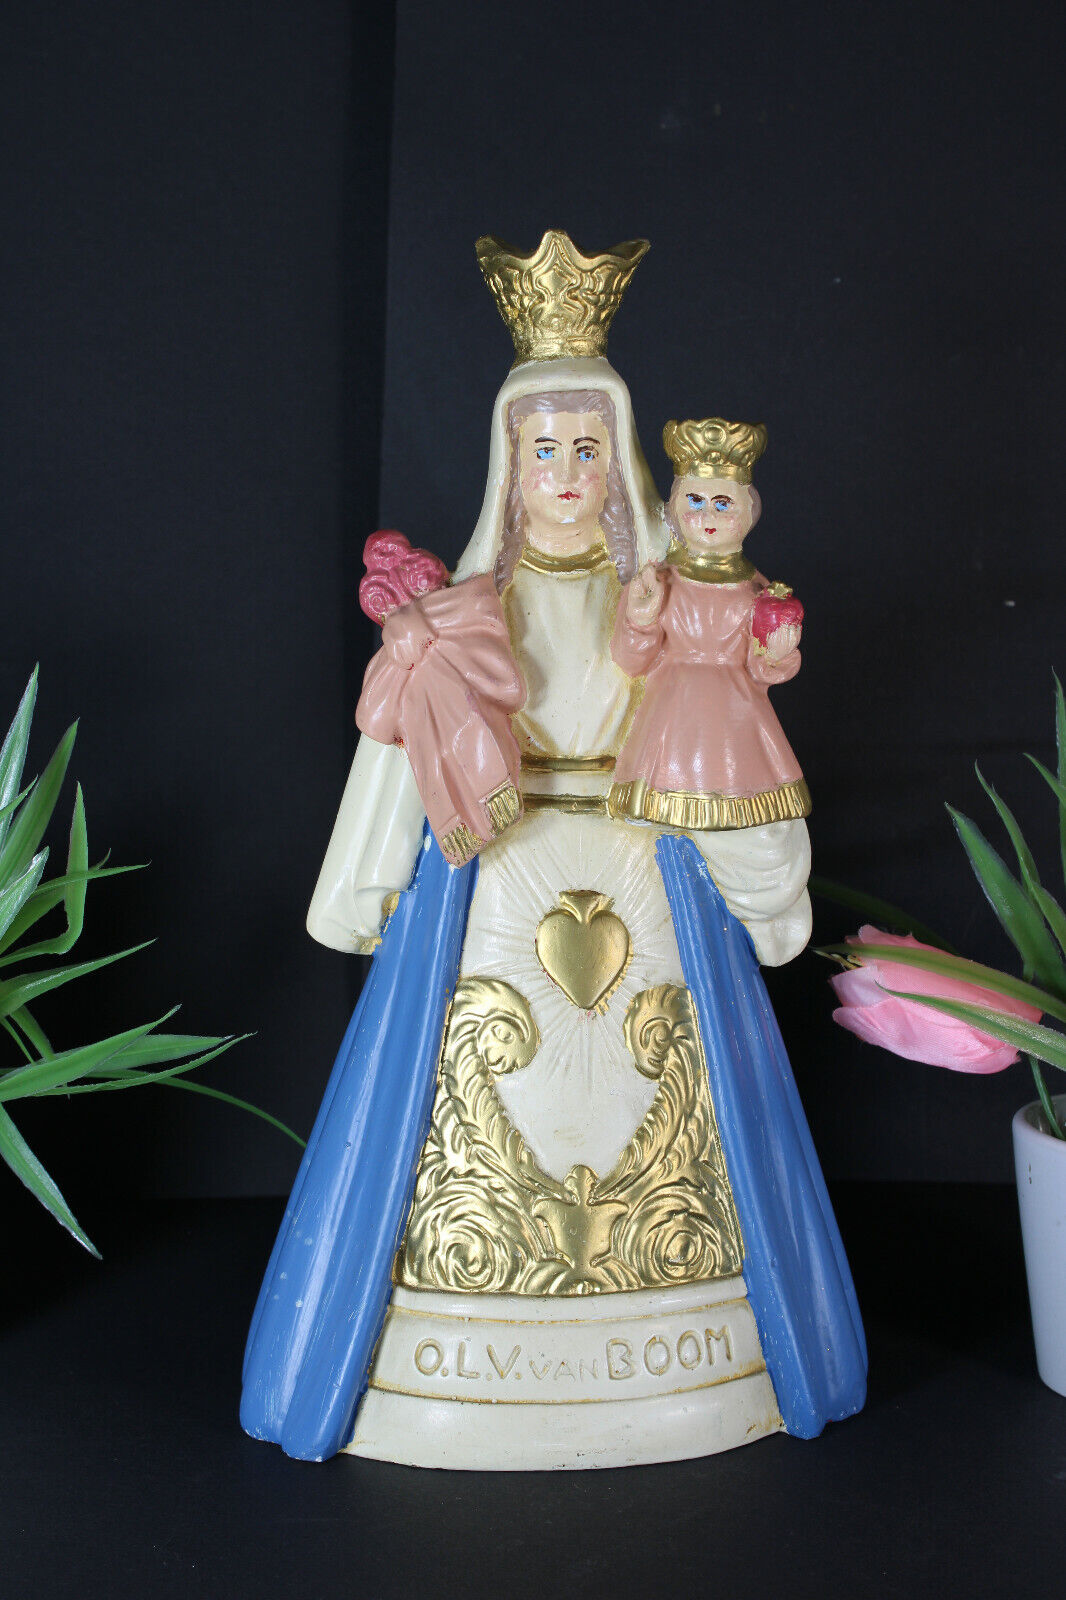 Antique Brussels OLV de Boom Madonna saint figurine statue marked 